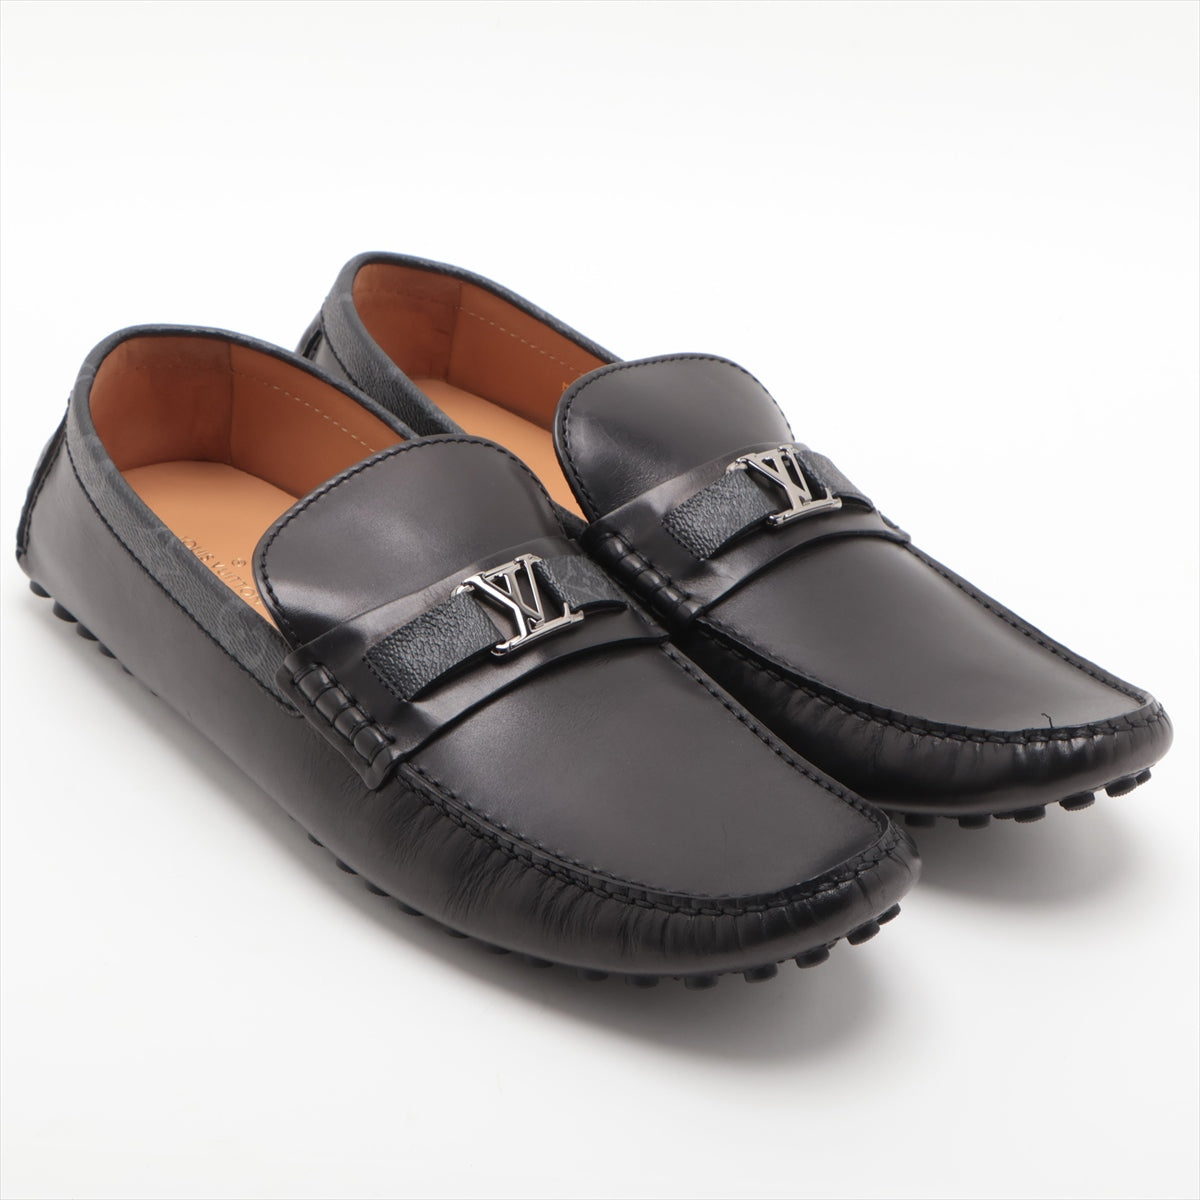 Louis Vuitton Hockenheim Line 20 years Leather Driving shoes 13 Men's Black x Gray ND0210 Monogram